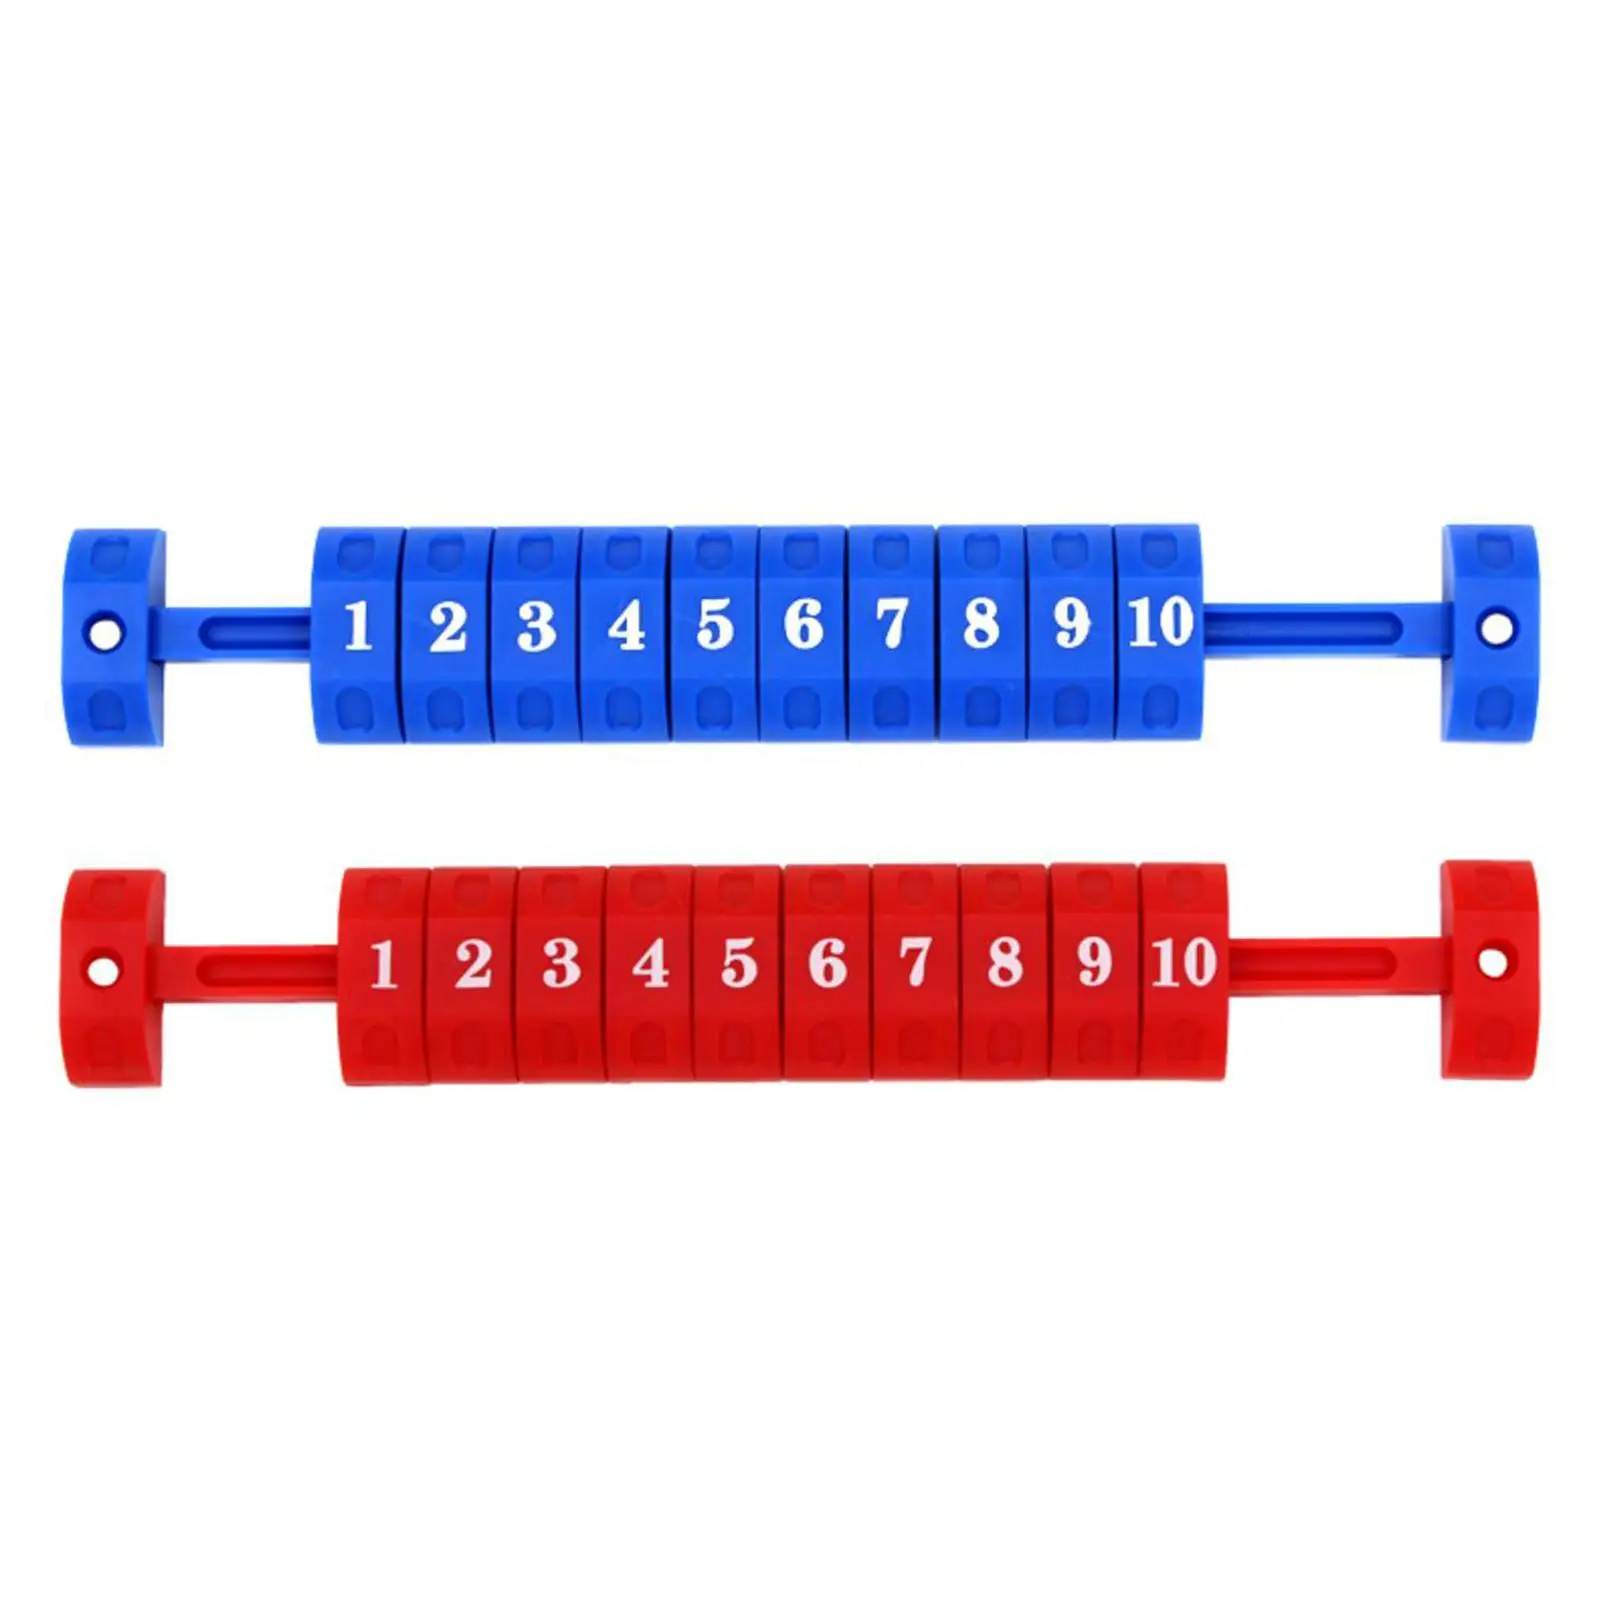 2x Universal Foosball Scoreboard Counters Indicator Keepers Scoring Units for